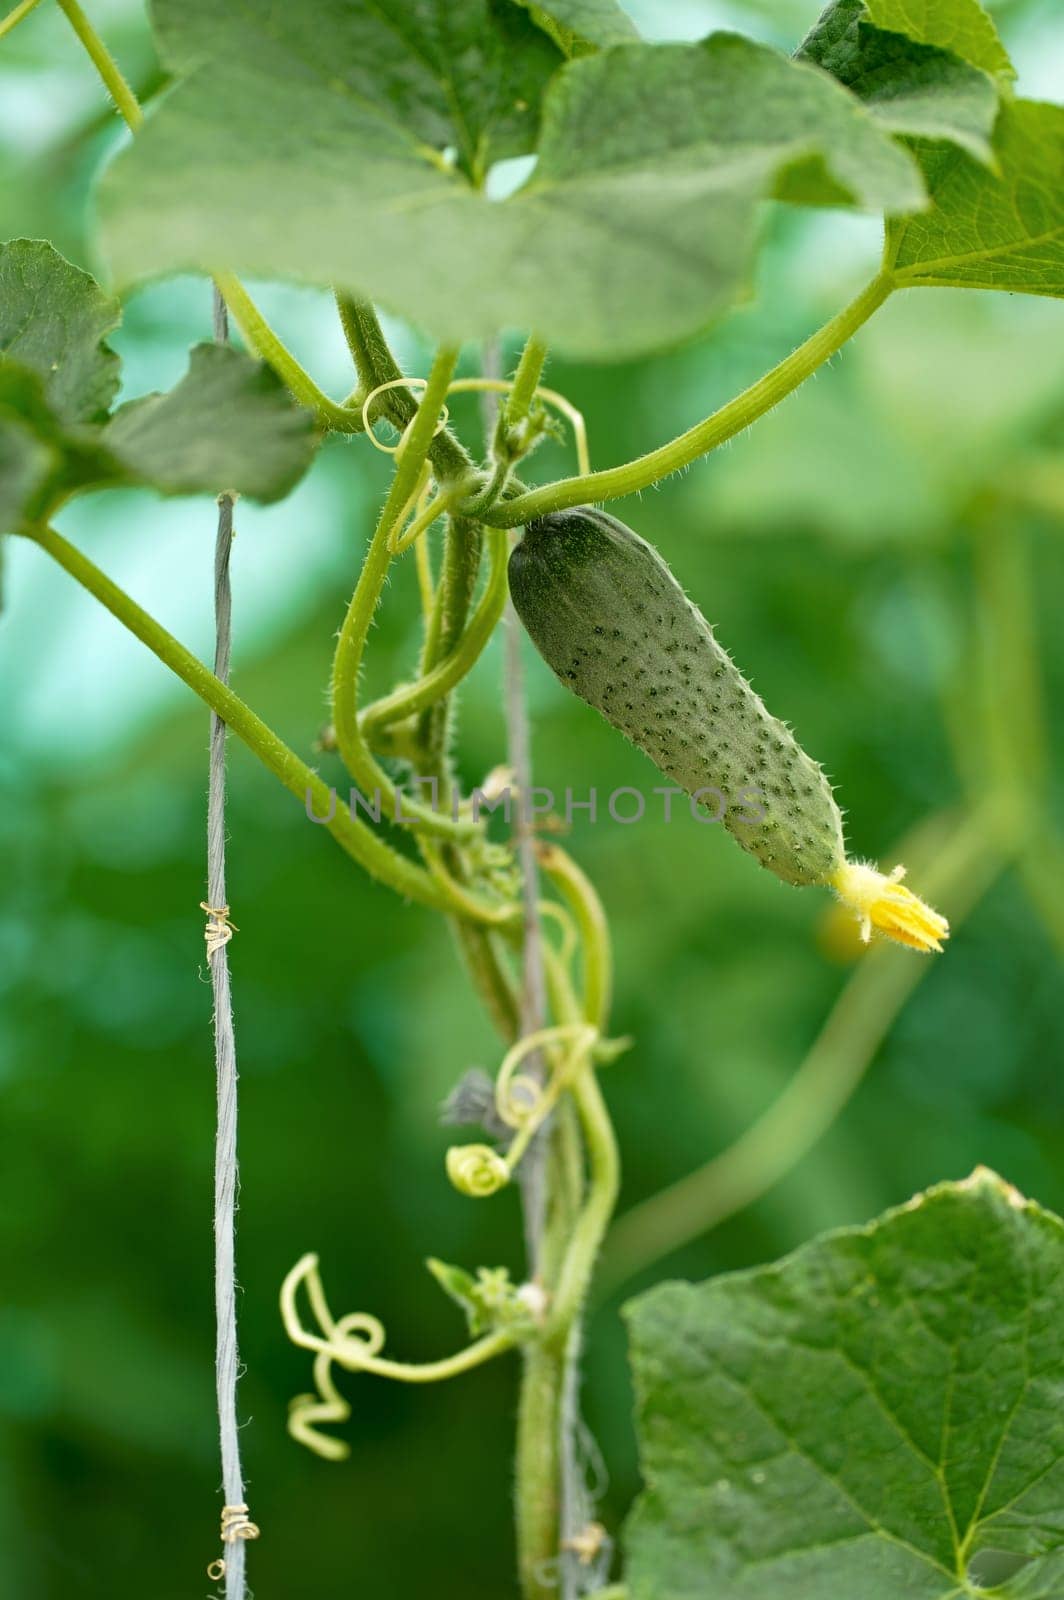 Greenhouse economy. Organic farming Growing cucumbers